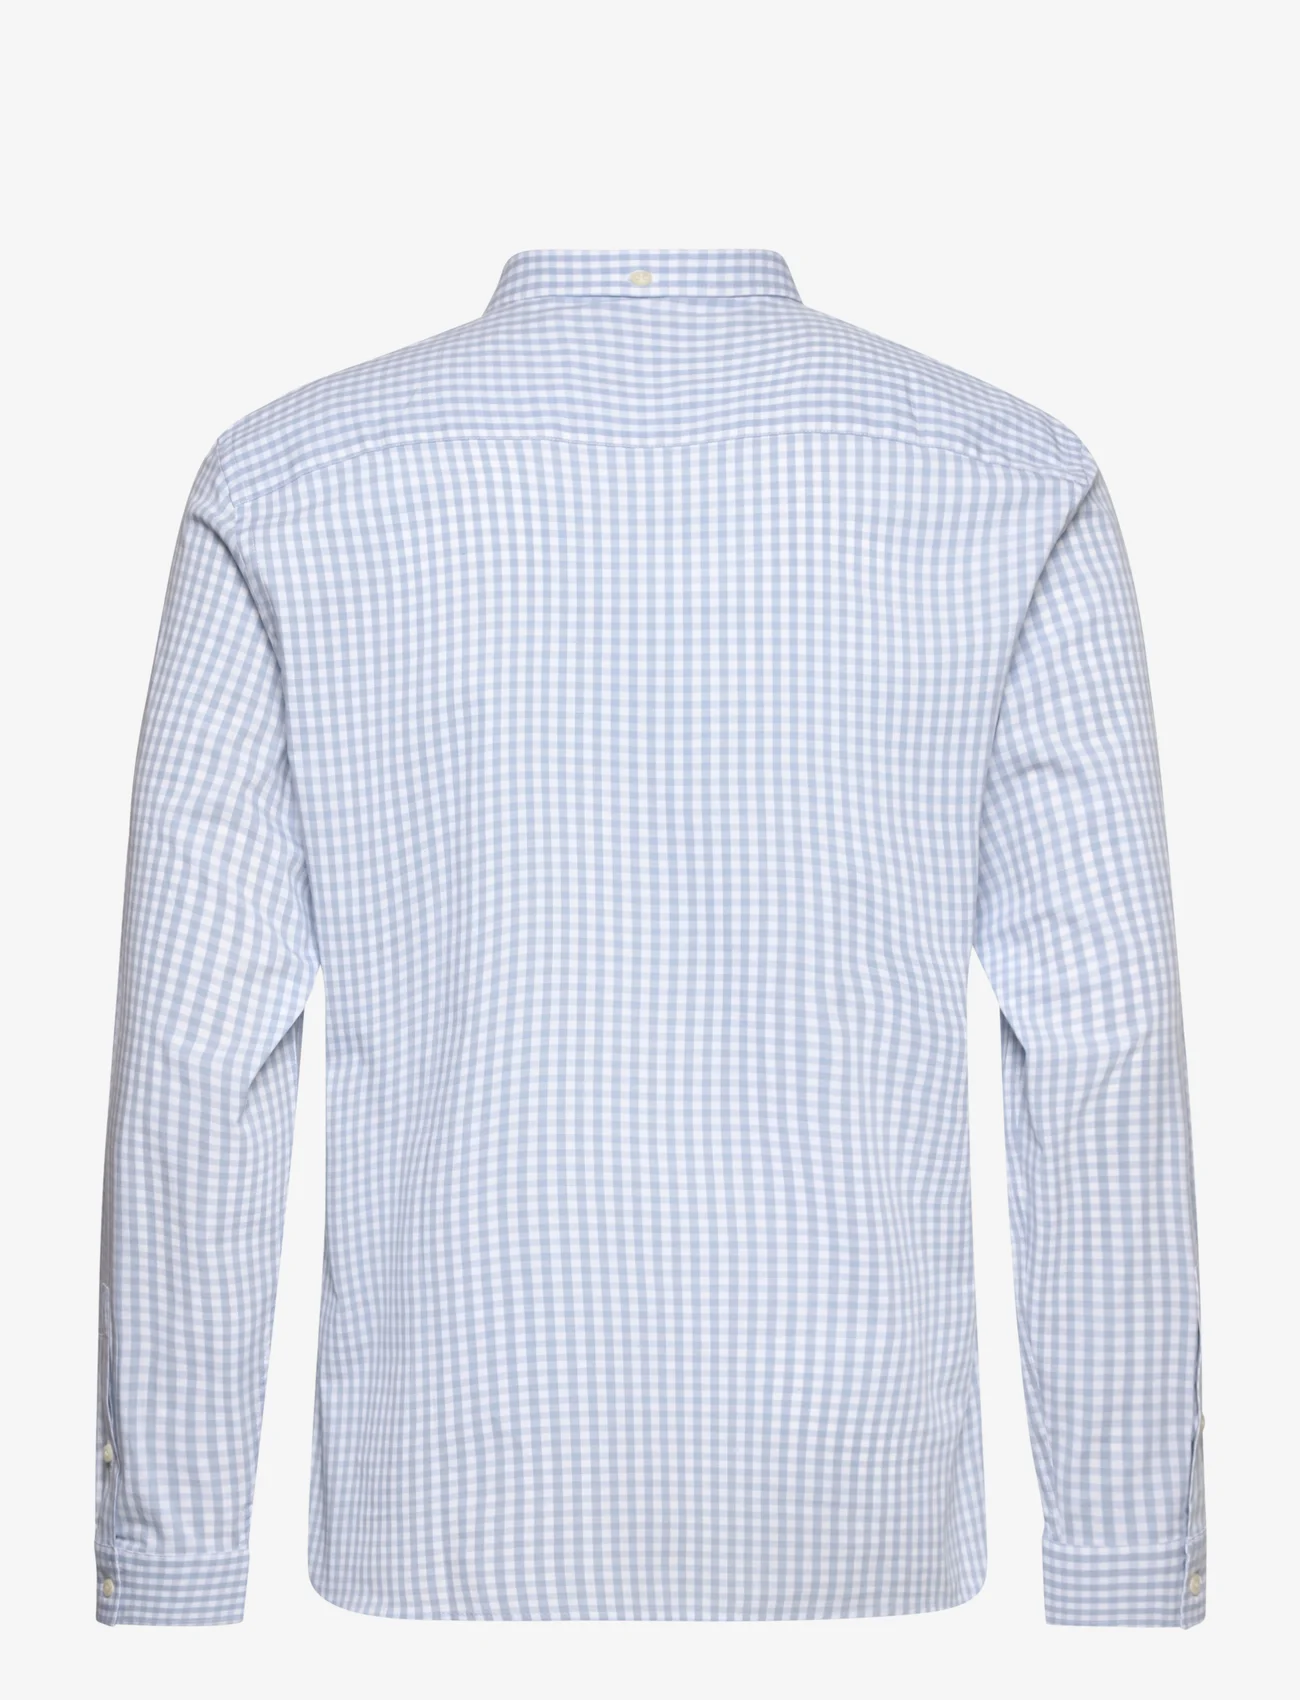 Lyle & Scott - LS Slim Fit Gingham Shirt - geruite overhemden - light blue/ white - 1